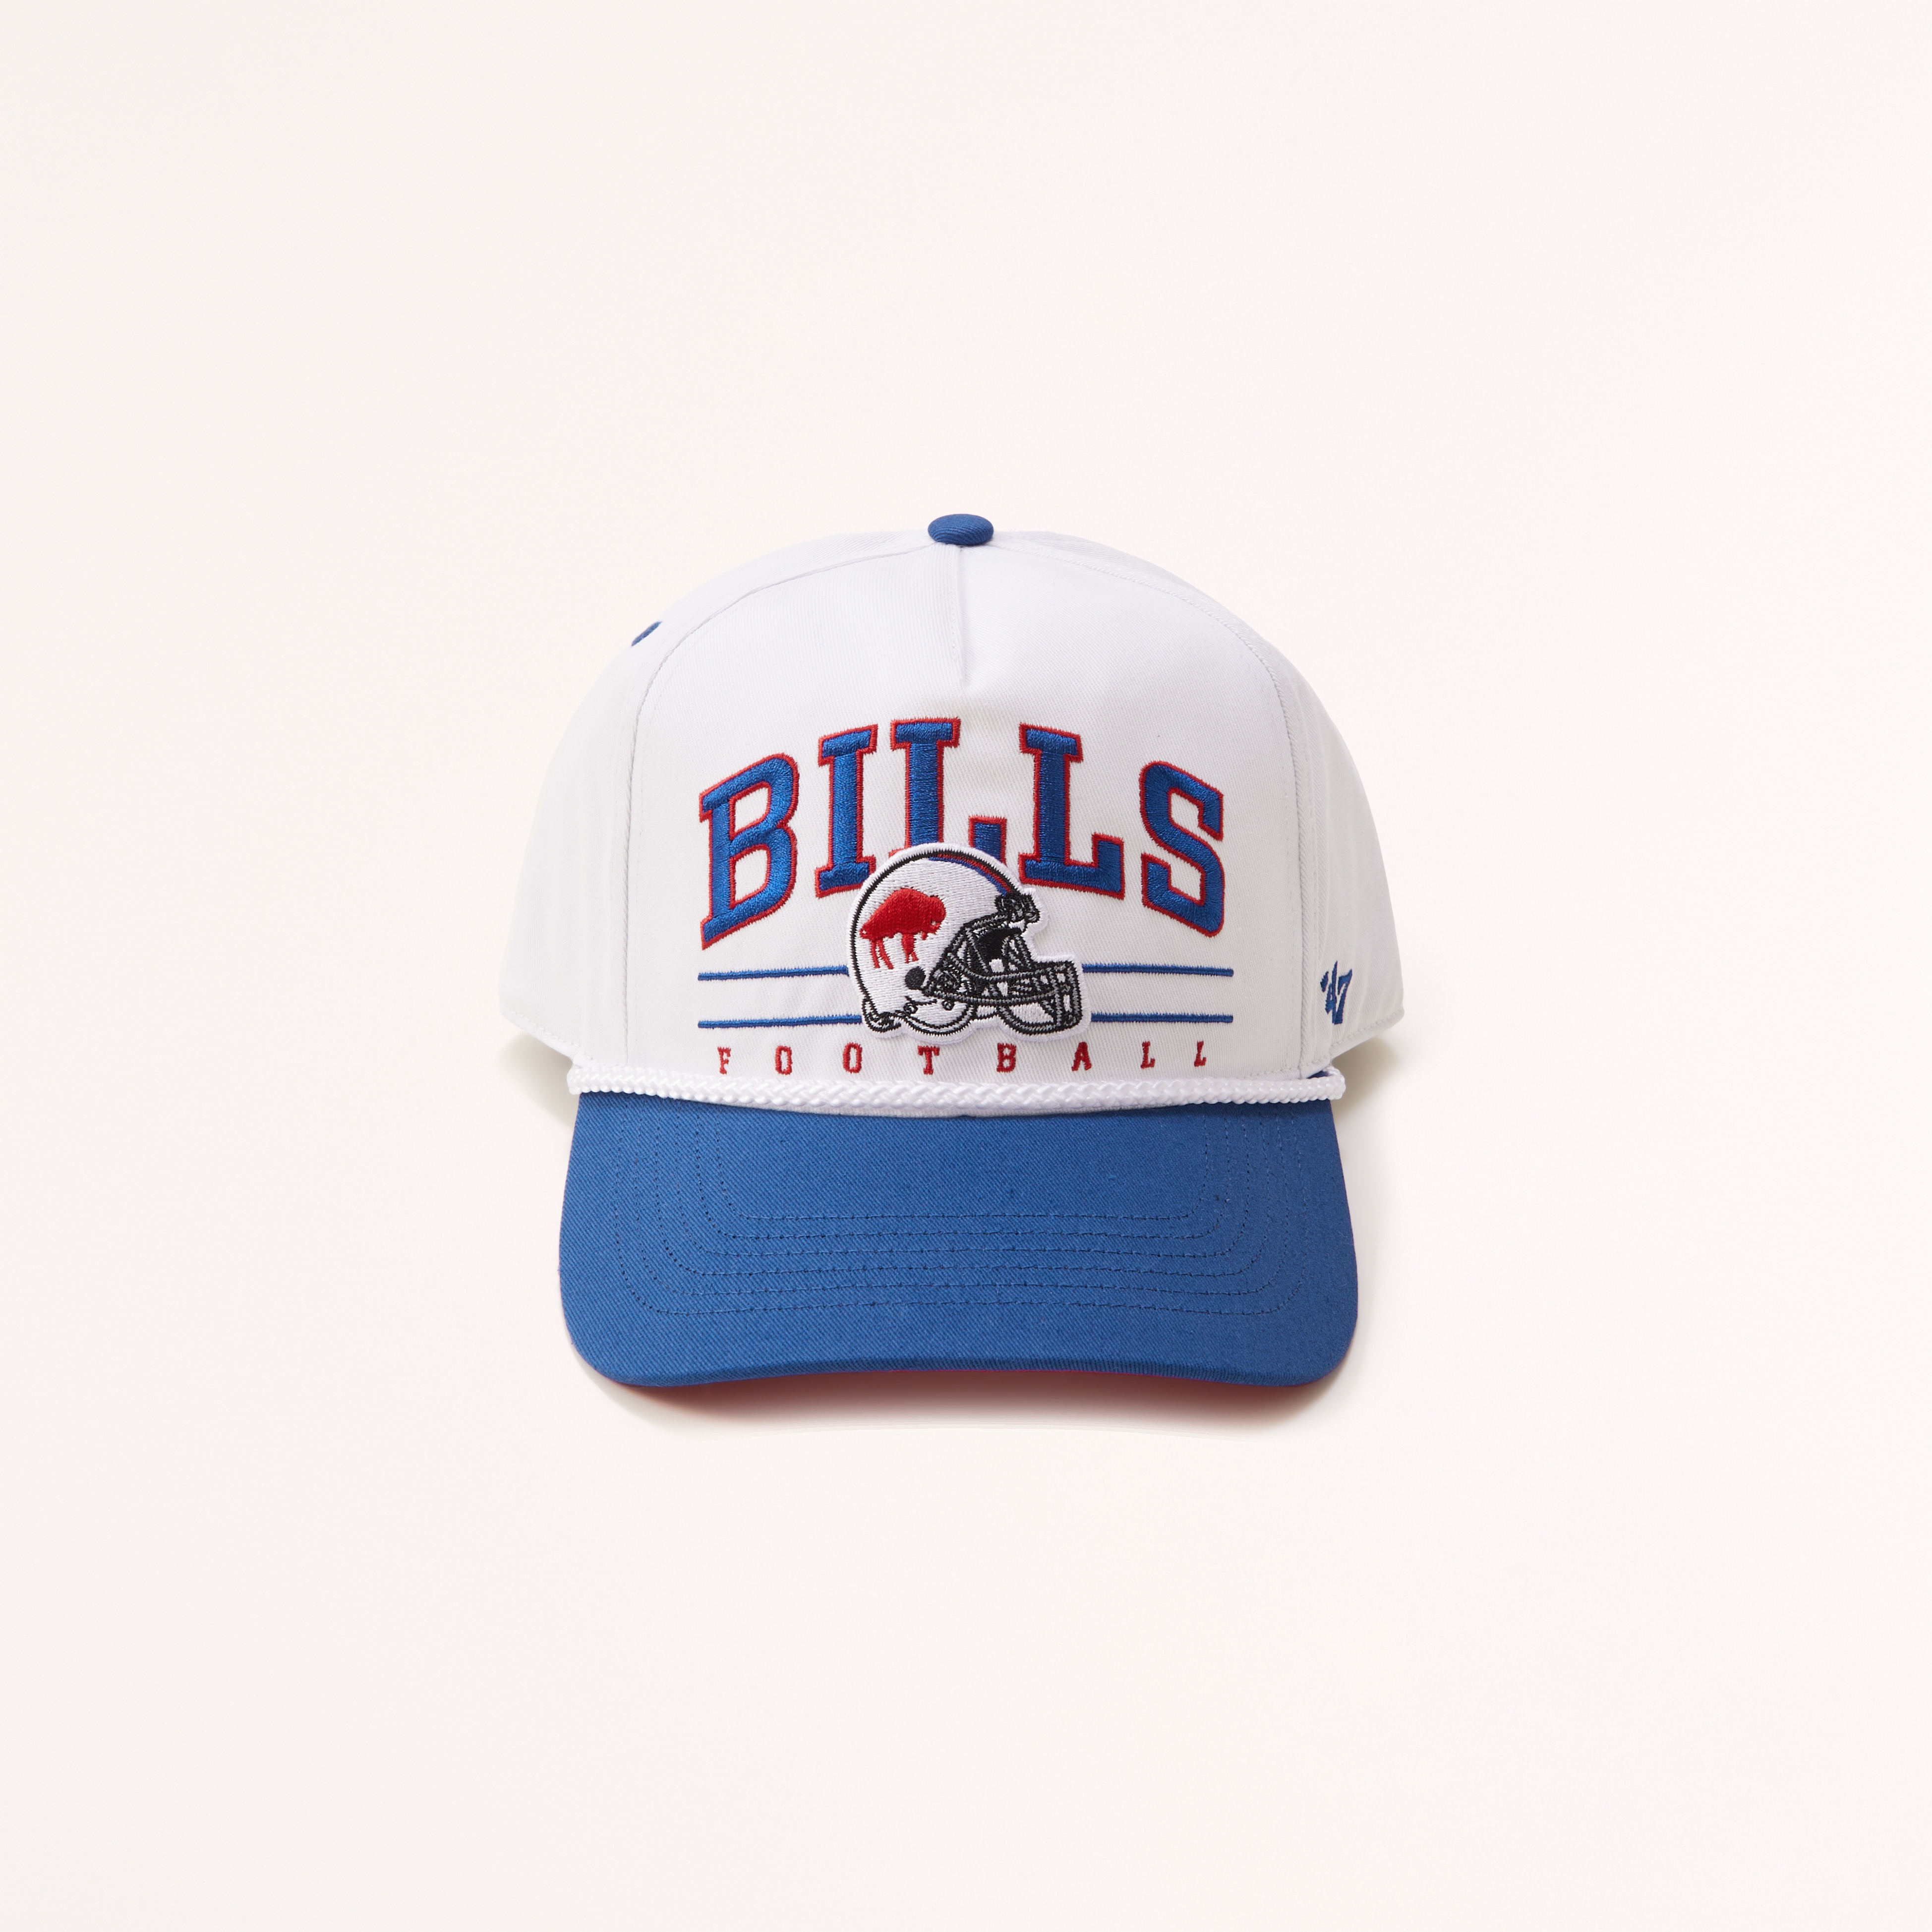 Chicago Bears Graphic Baseball Hat